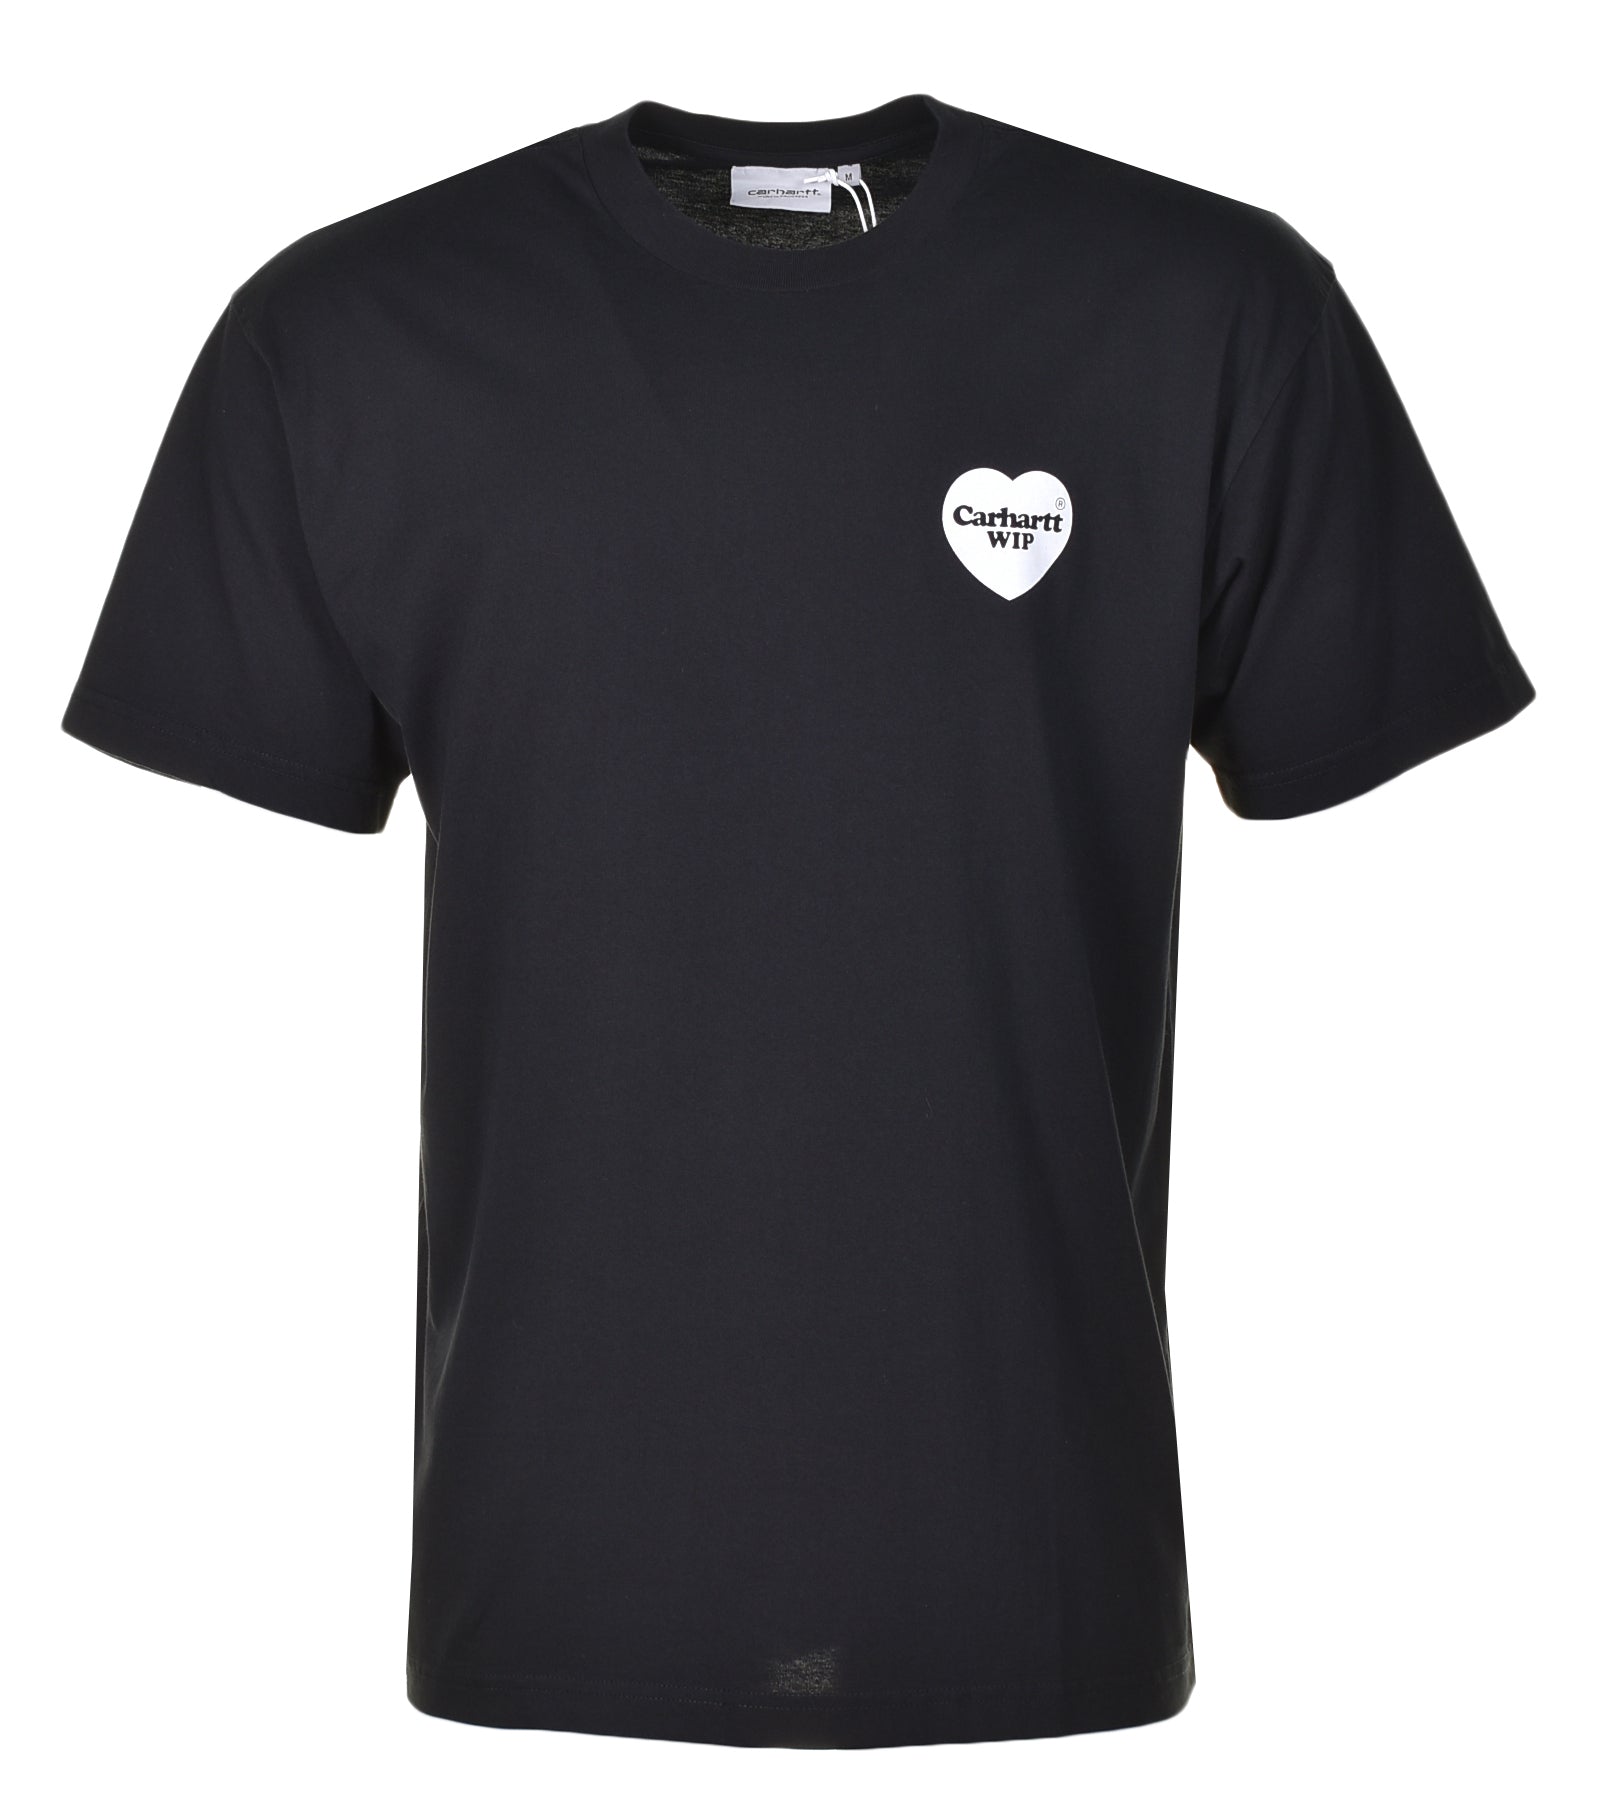 Short Sleeve Heart Bandana T Shirt Black